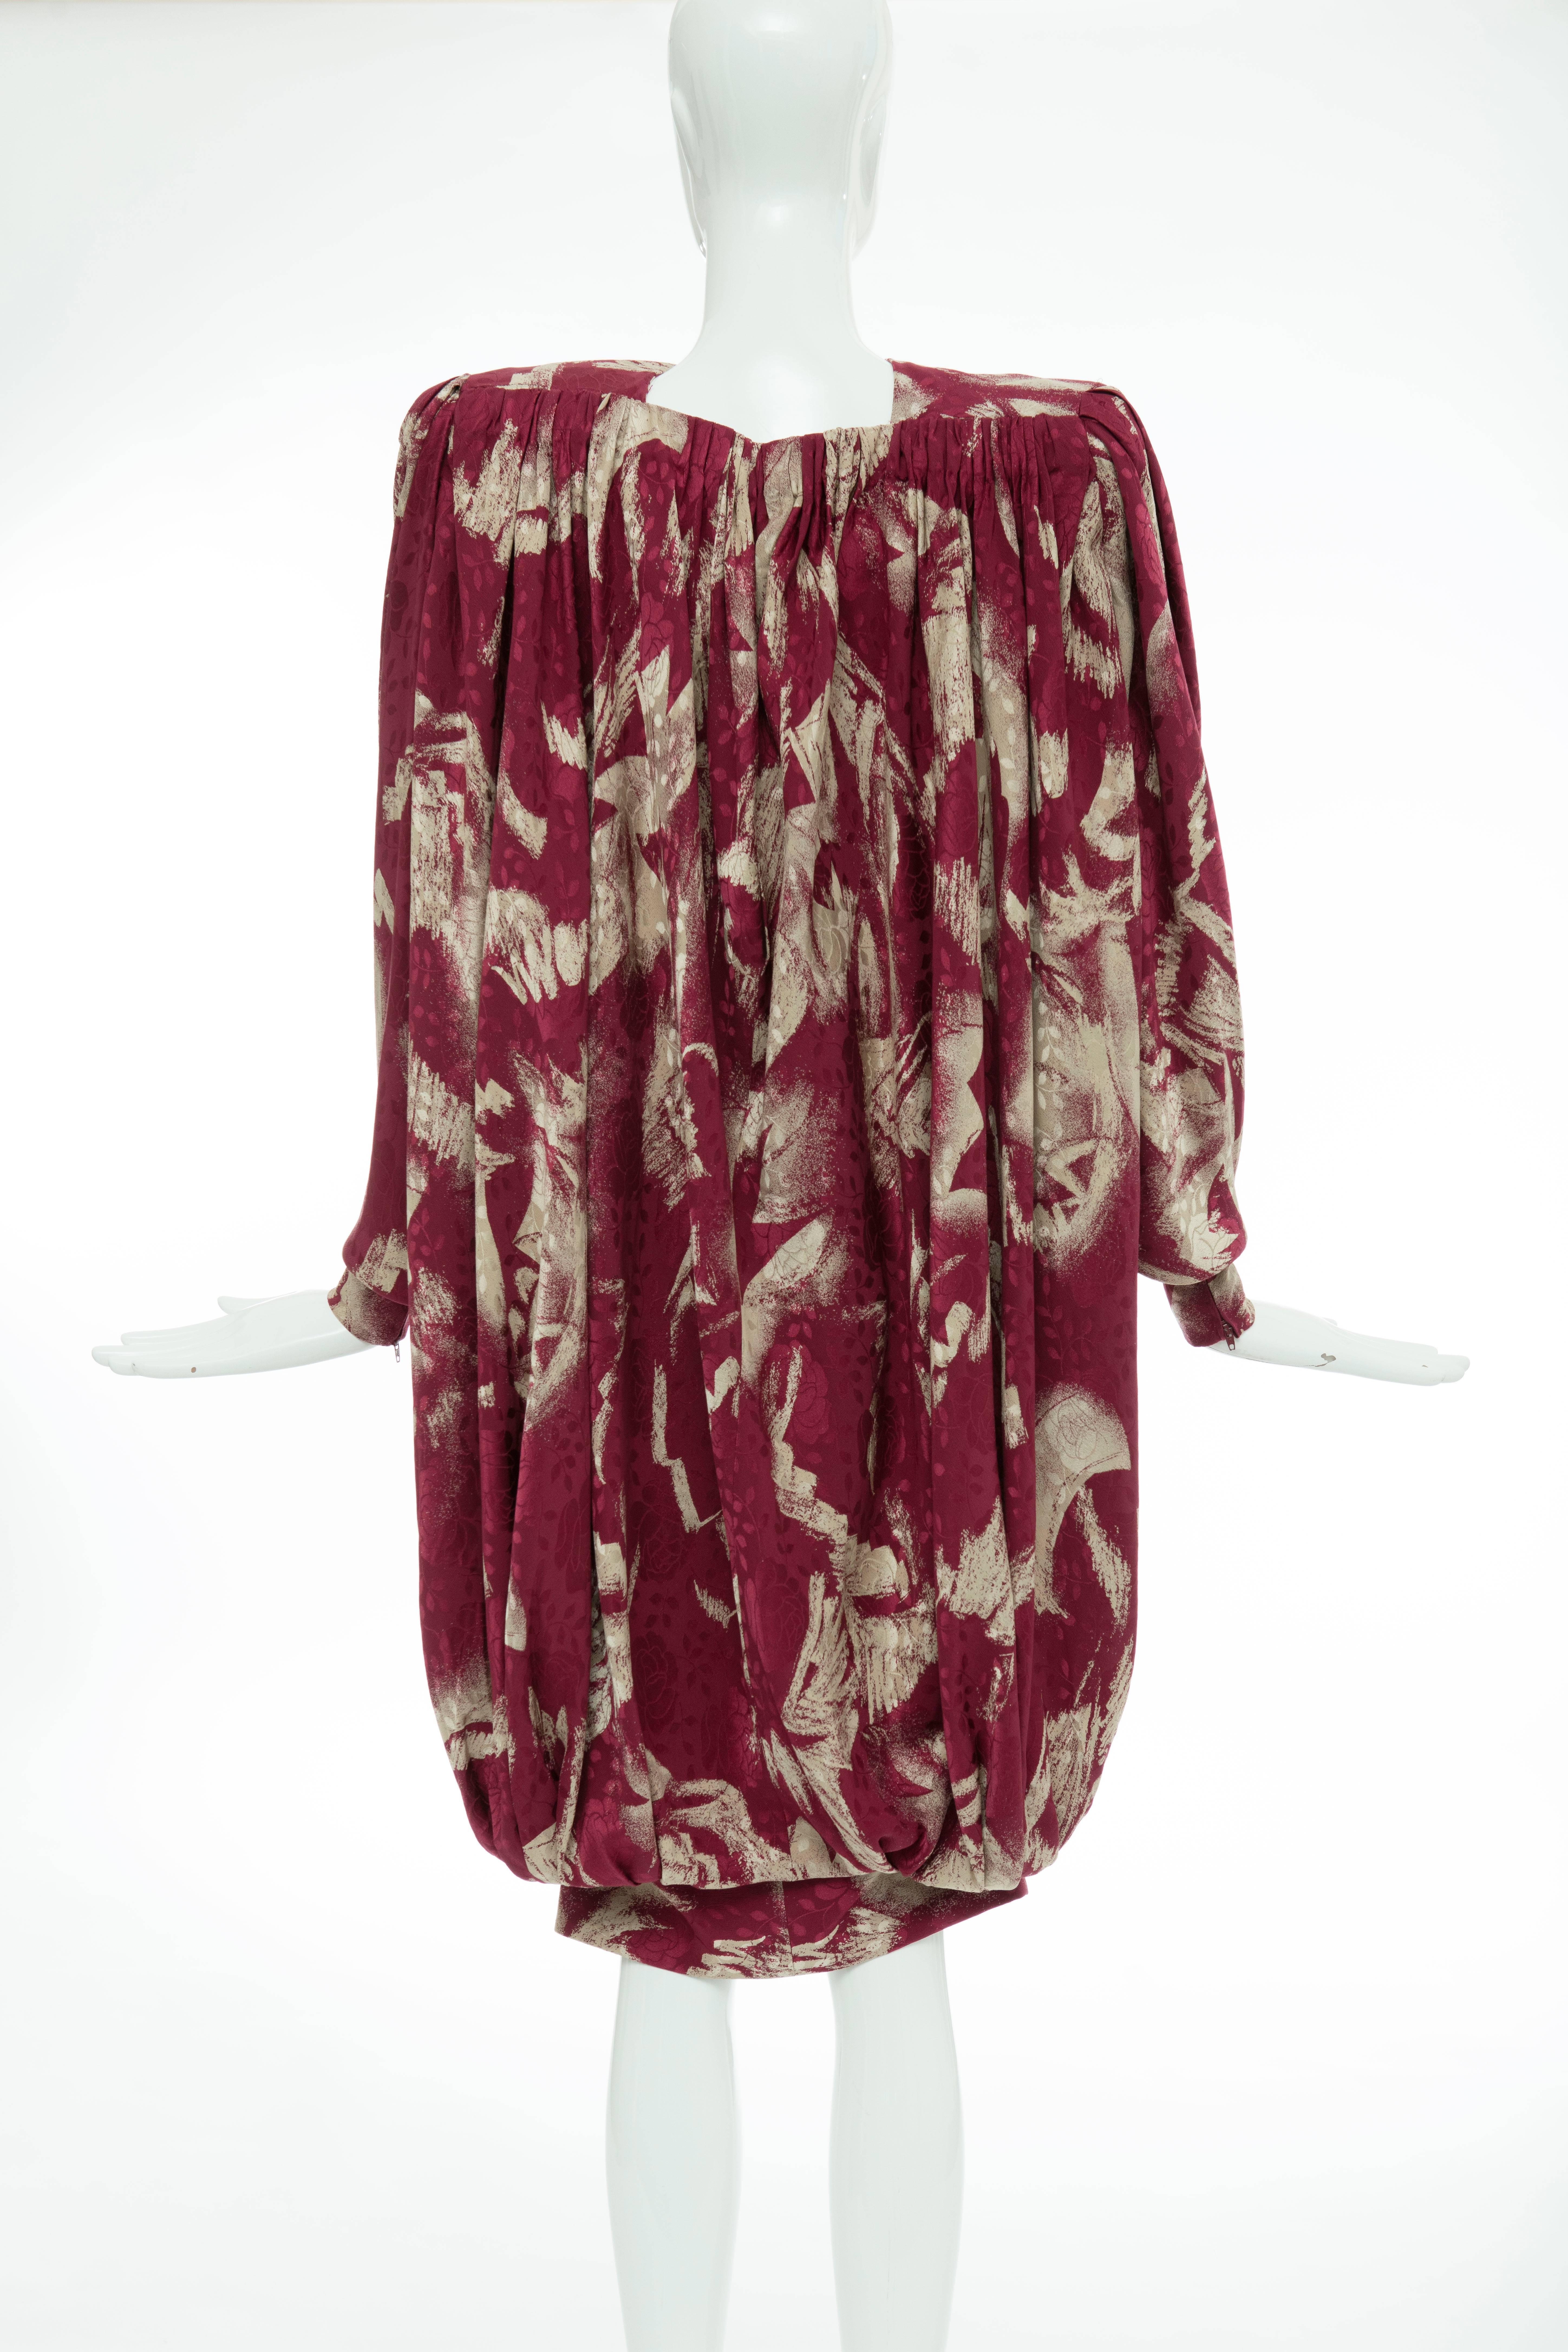 Emanuel Ungaro Couture Paris Printed Silk Balloon Collection Dress, Circa 1980s In Excellent Condition For Sale In Cincinnati, OH